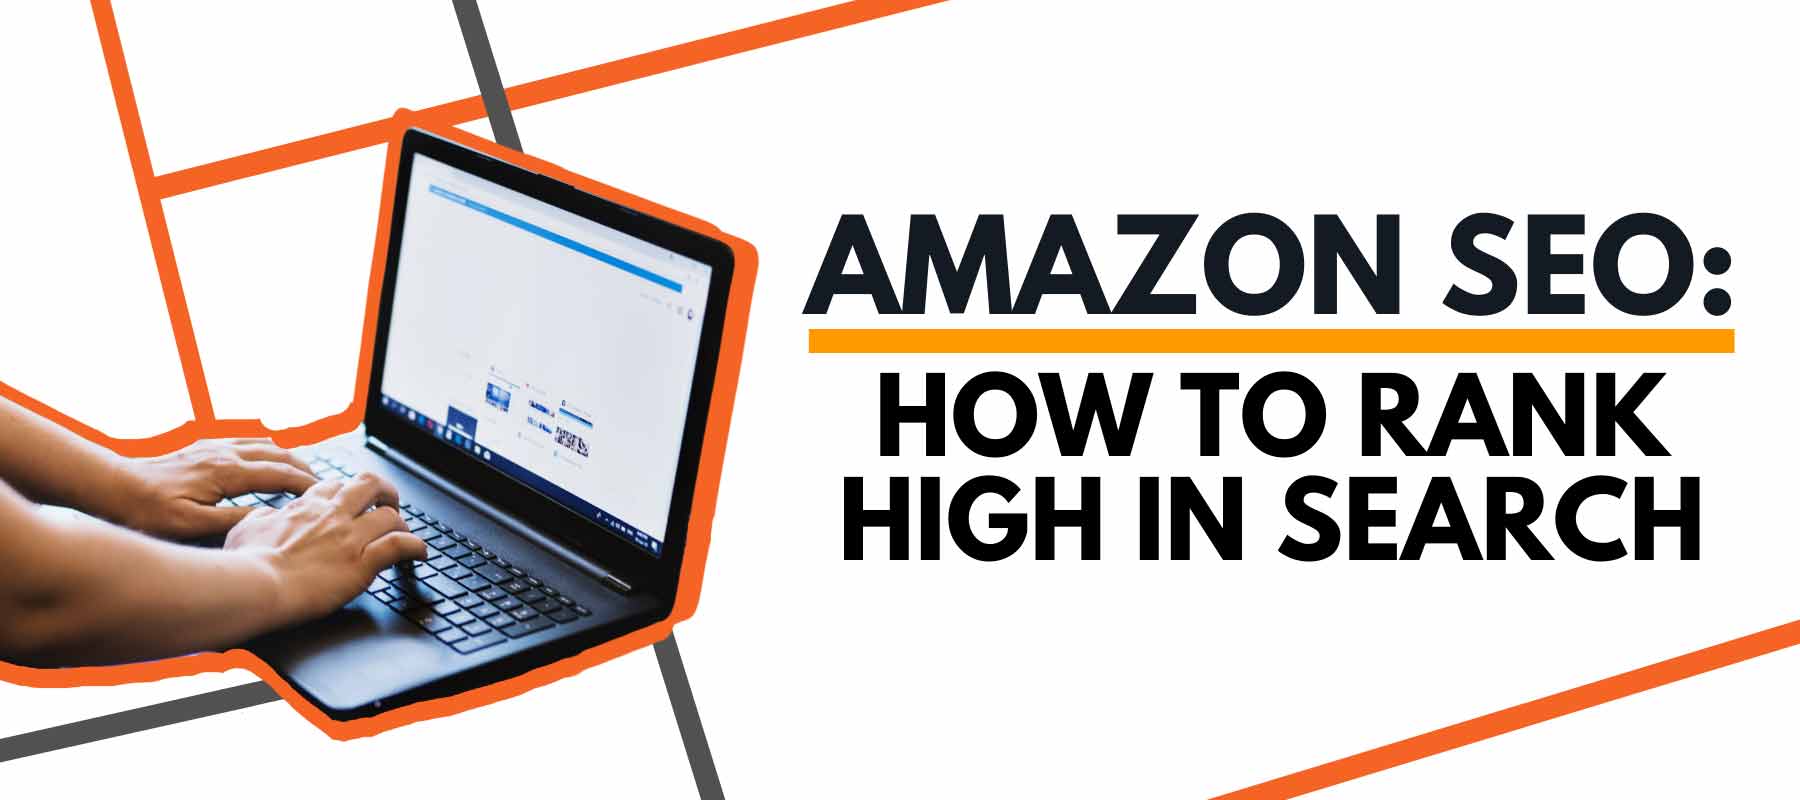 Amazon SEO: How to Rank High in Amazon Search